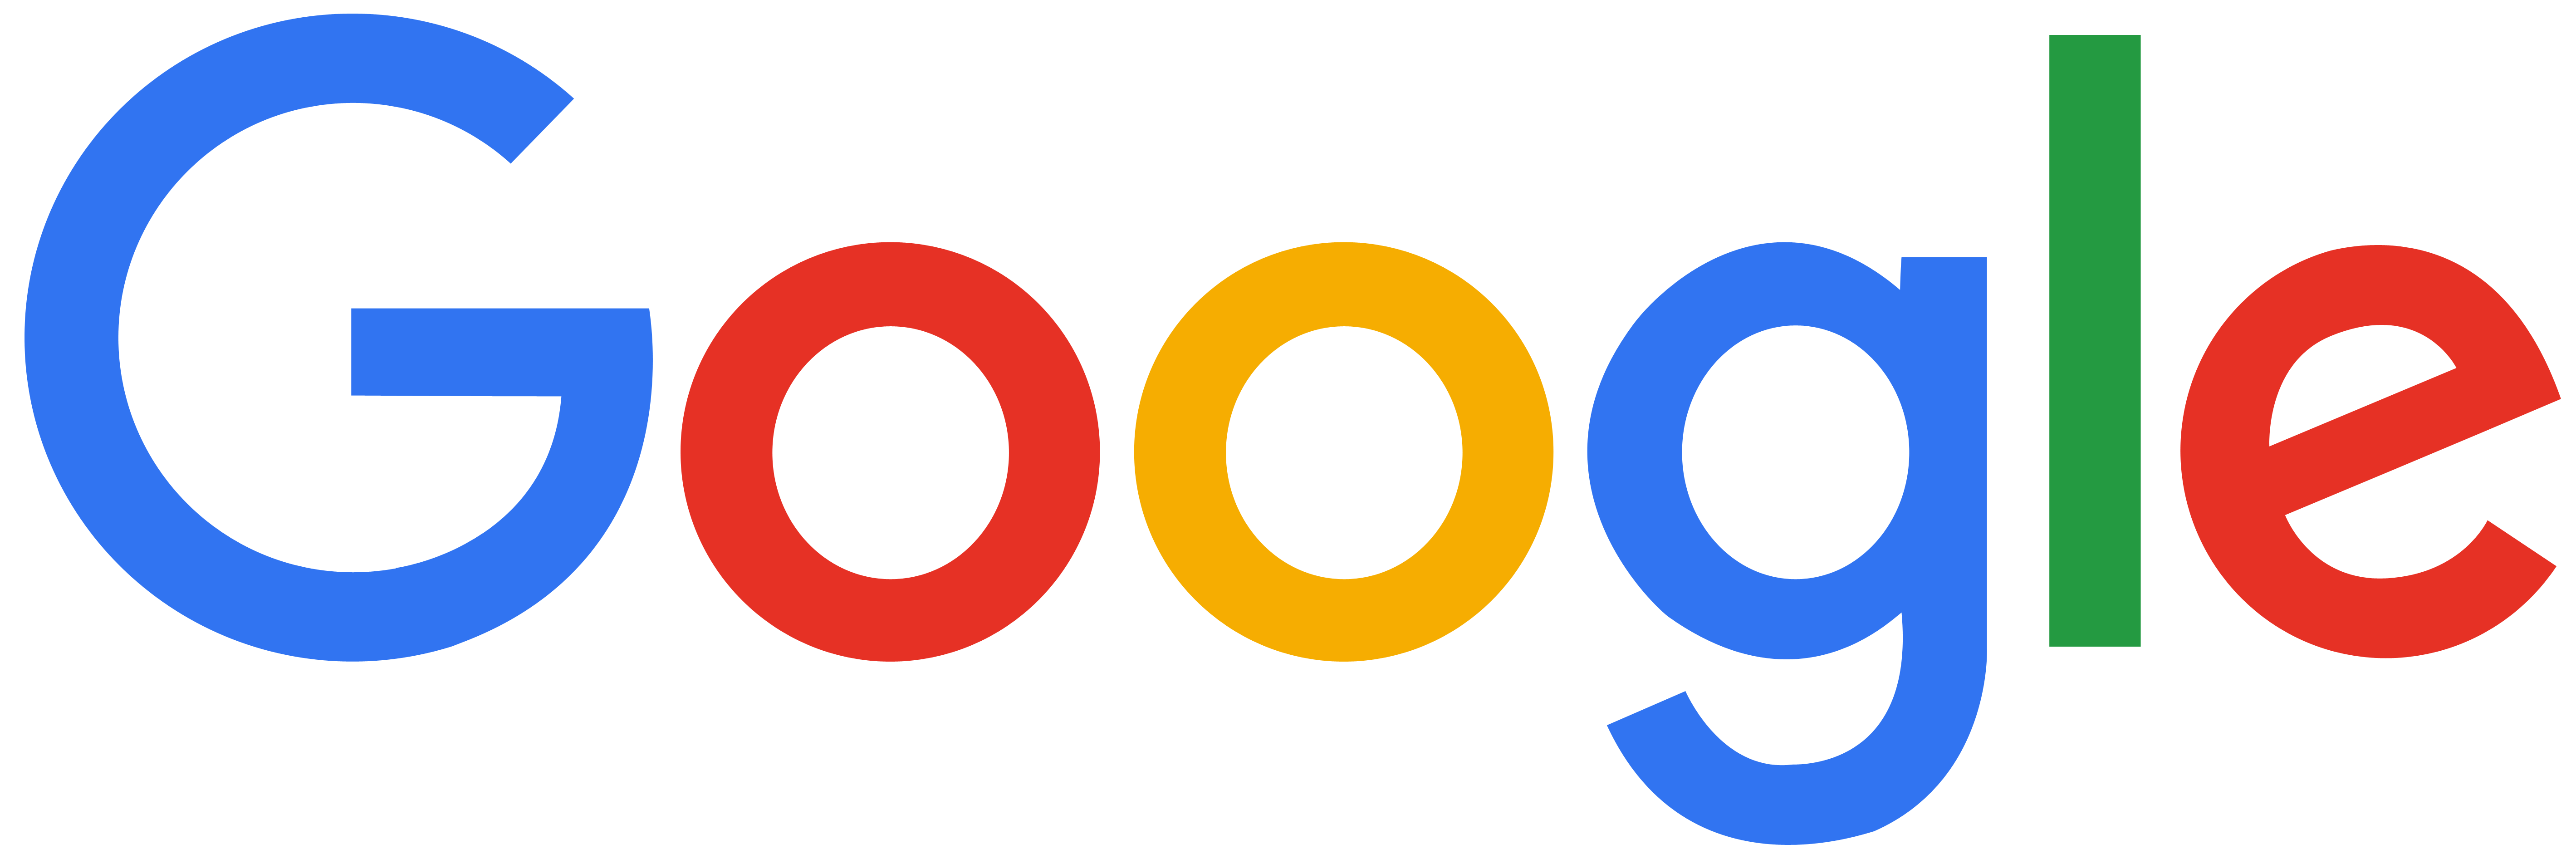 Google Logo History Png - Free Transparent PNG Logos - Google Logo Clear Background